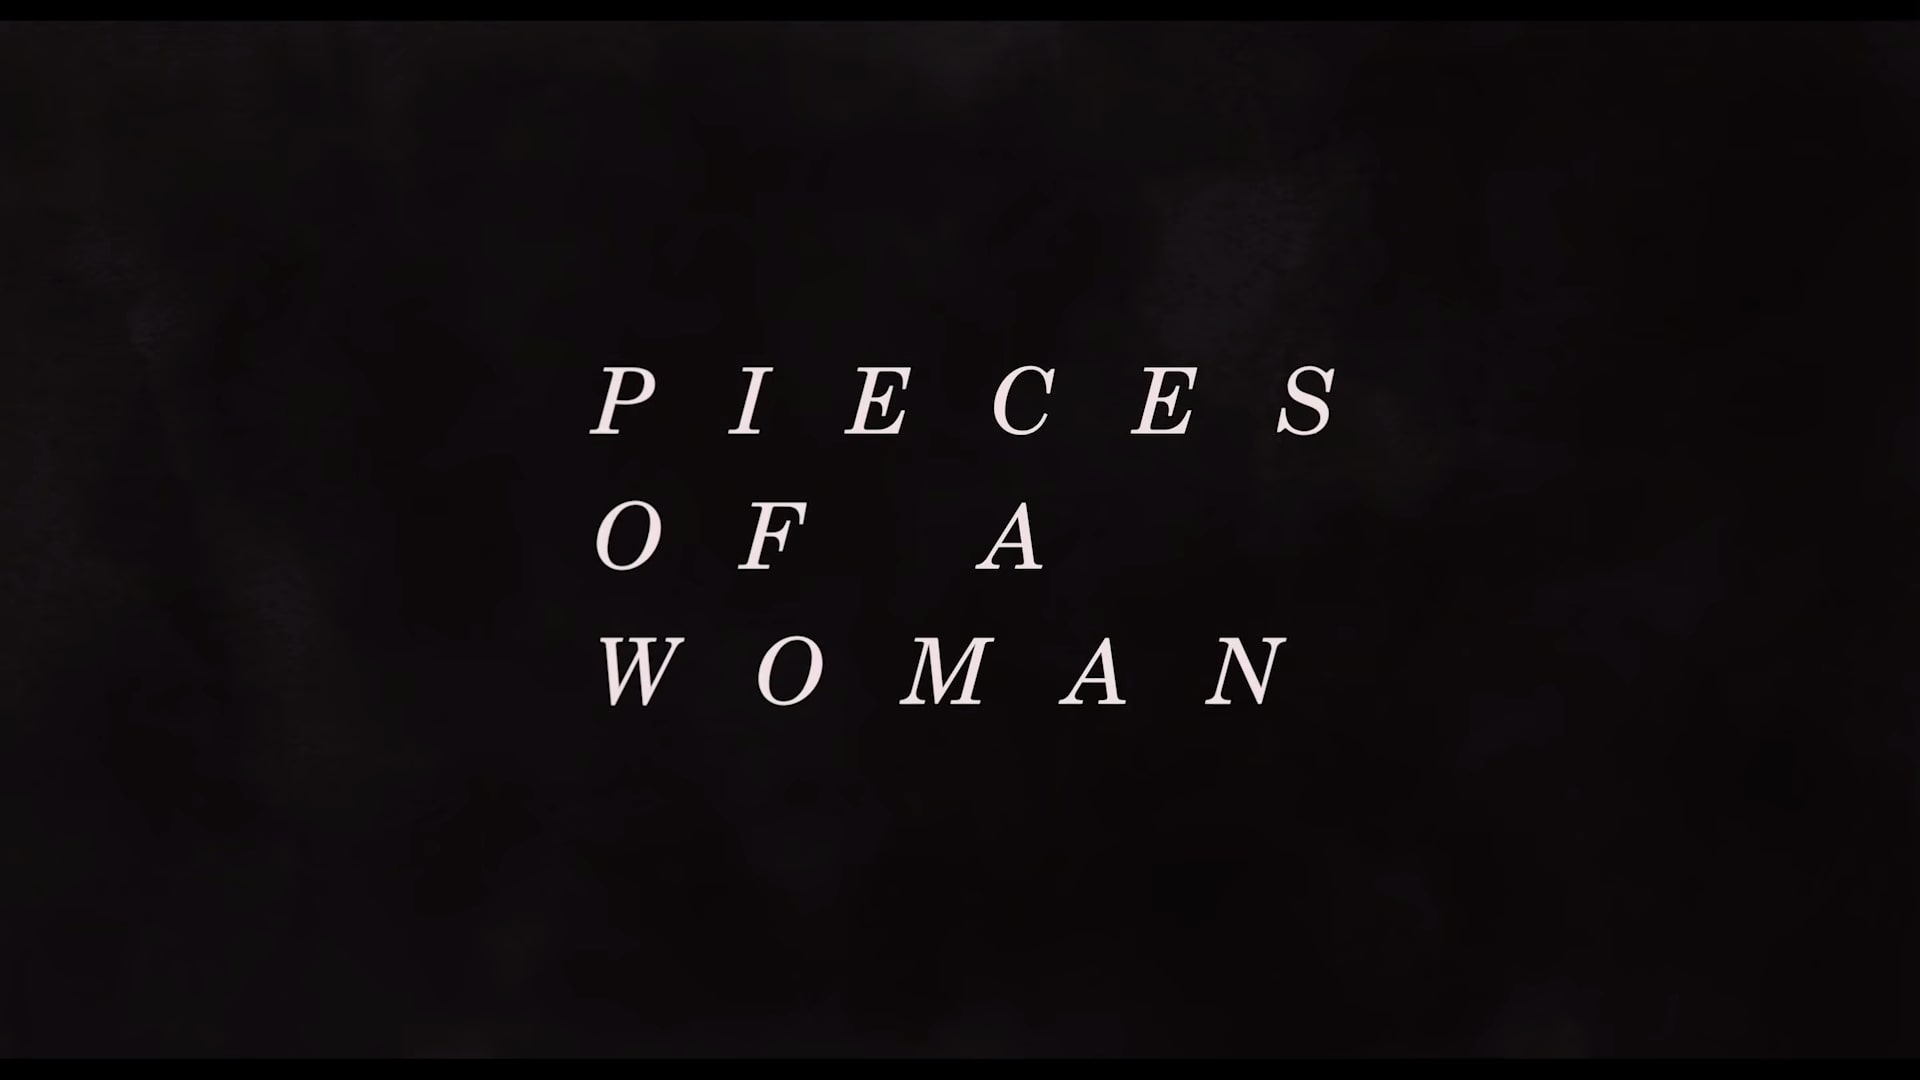 Netflix Pieces of a Woman Trailer, Netflix Drama Movies, Netflix Drama Films, Coming to Netflix in January 2021